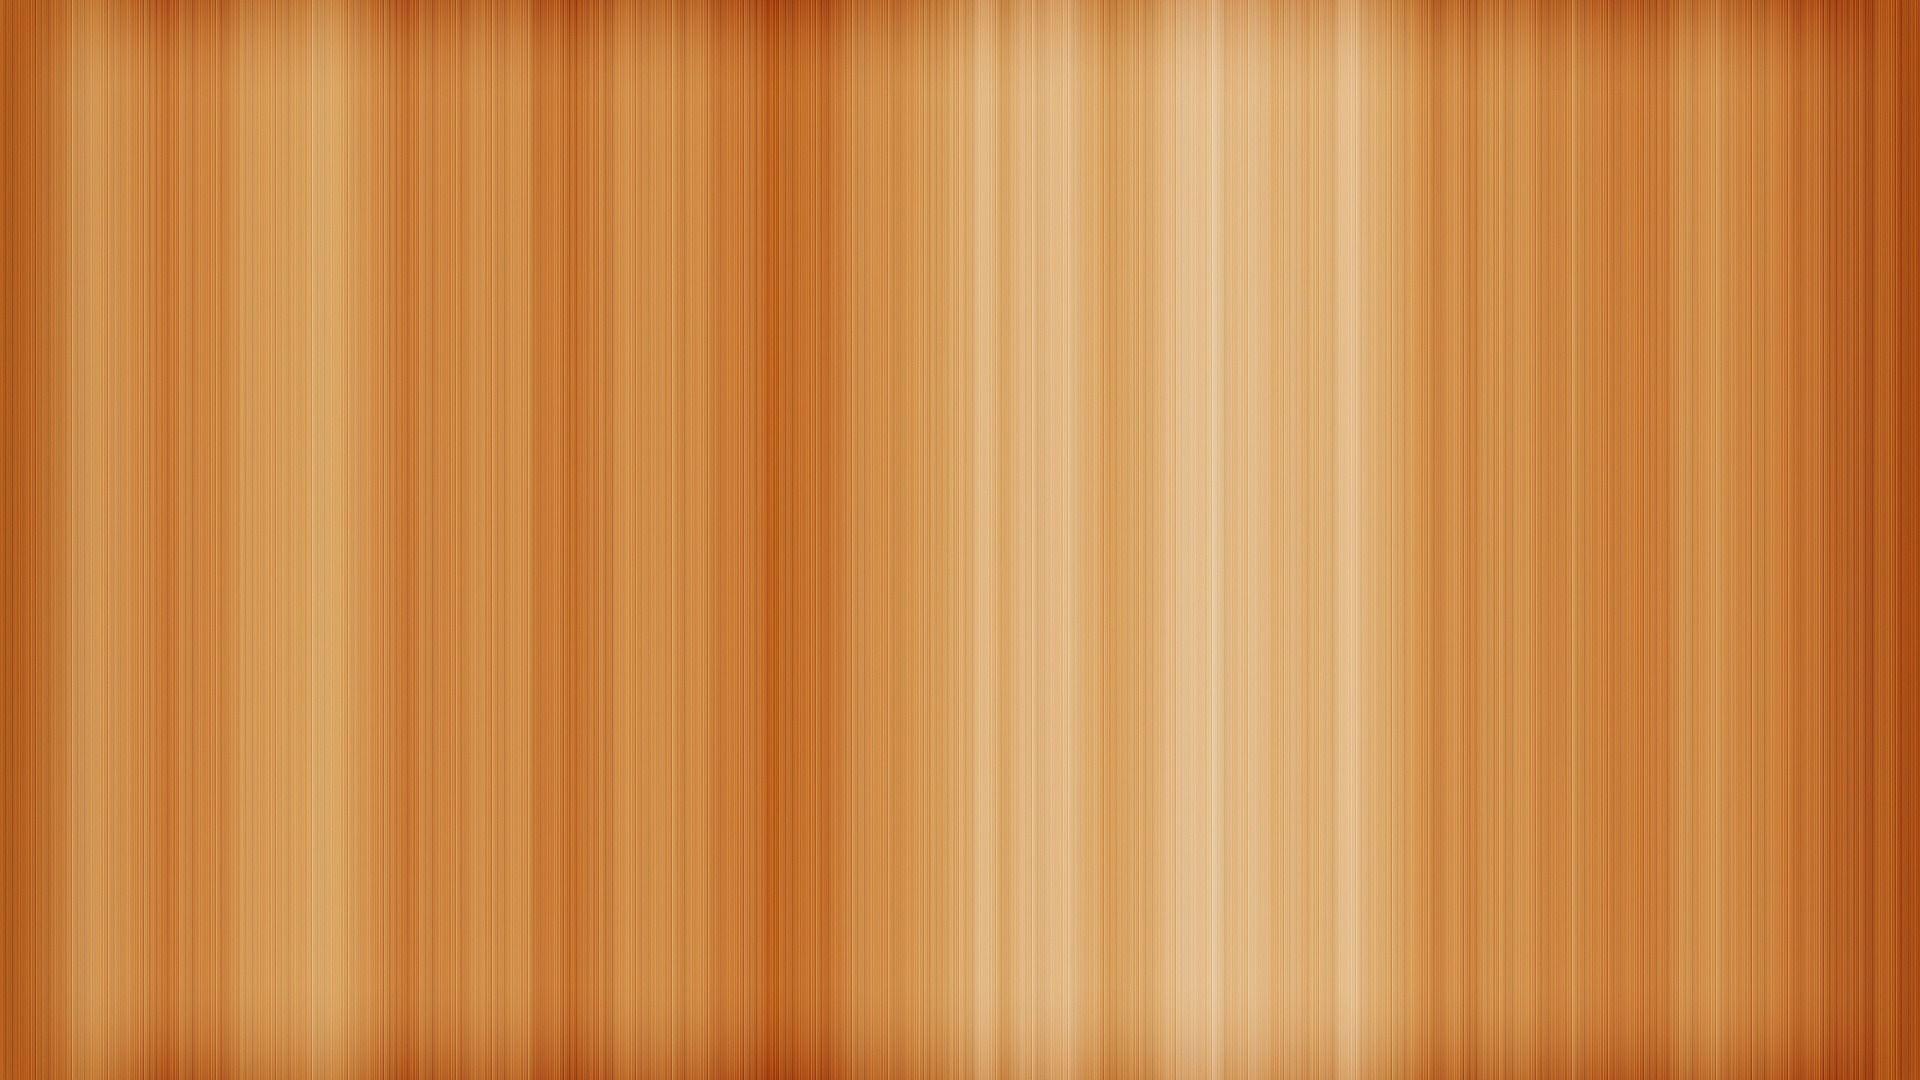 Wood HD Wallpaper Background Image